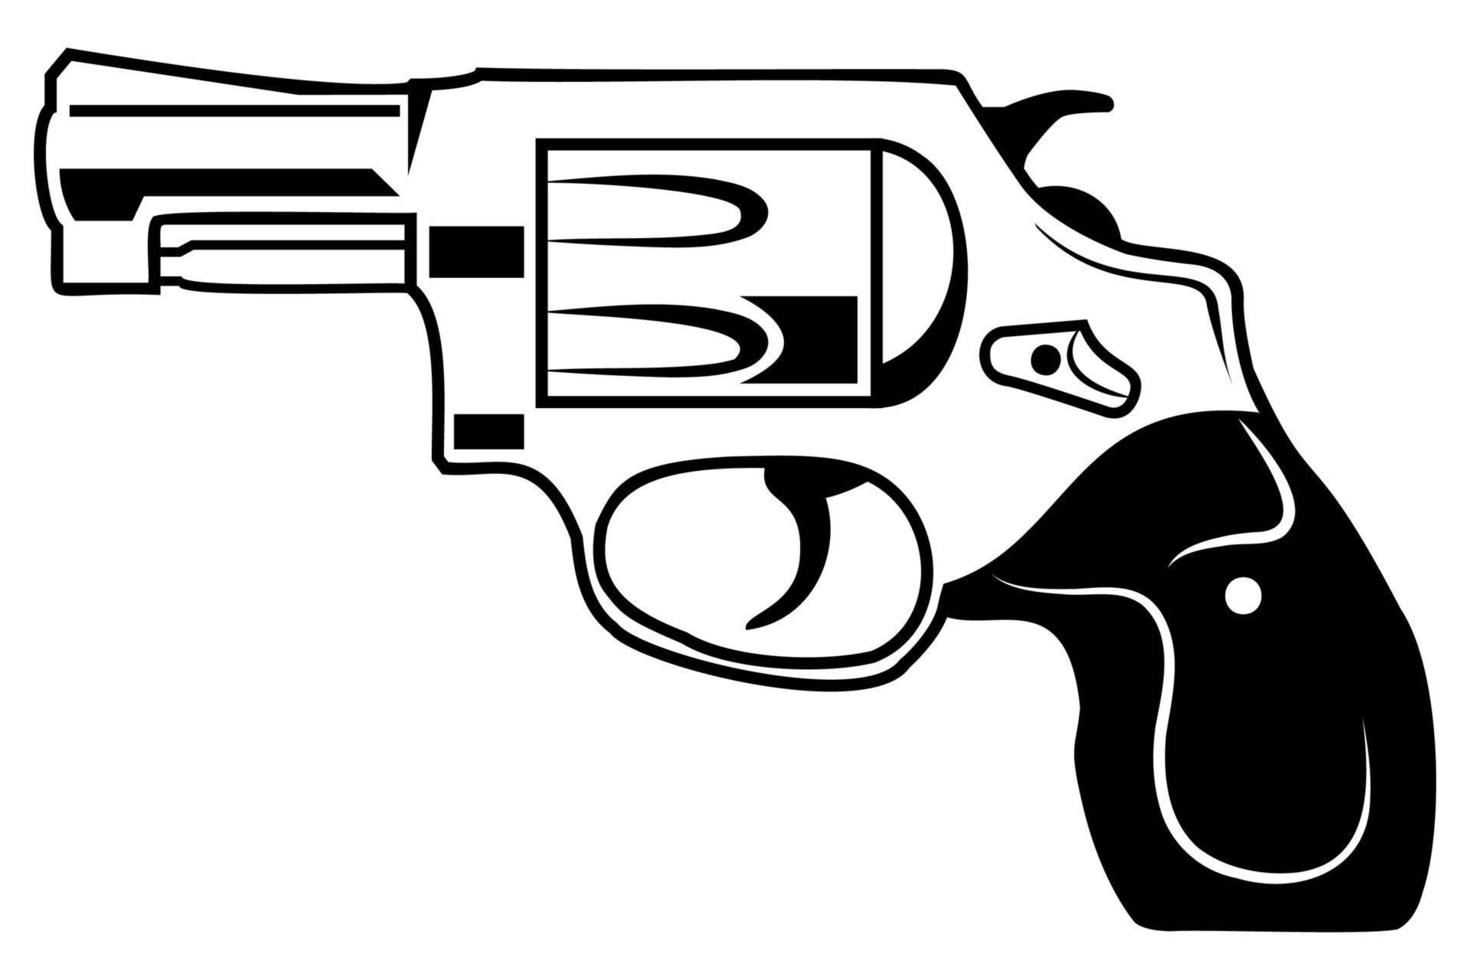 Revolver pistol illustration. Black pistol isolated on a white background. Shotgun icon vector design.